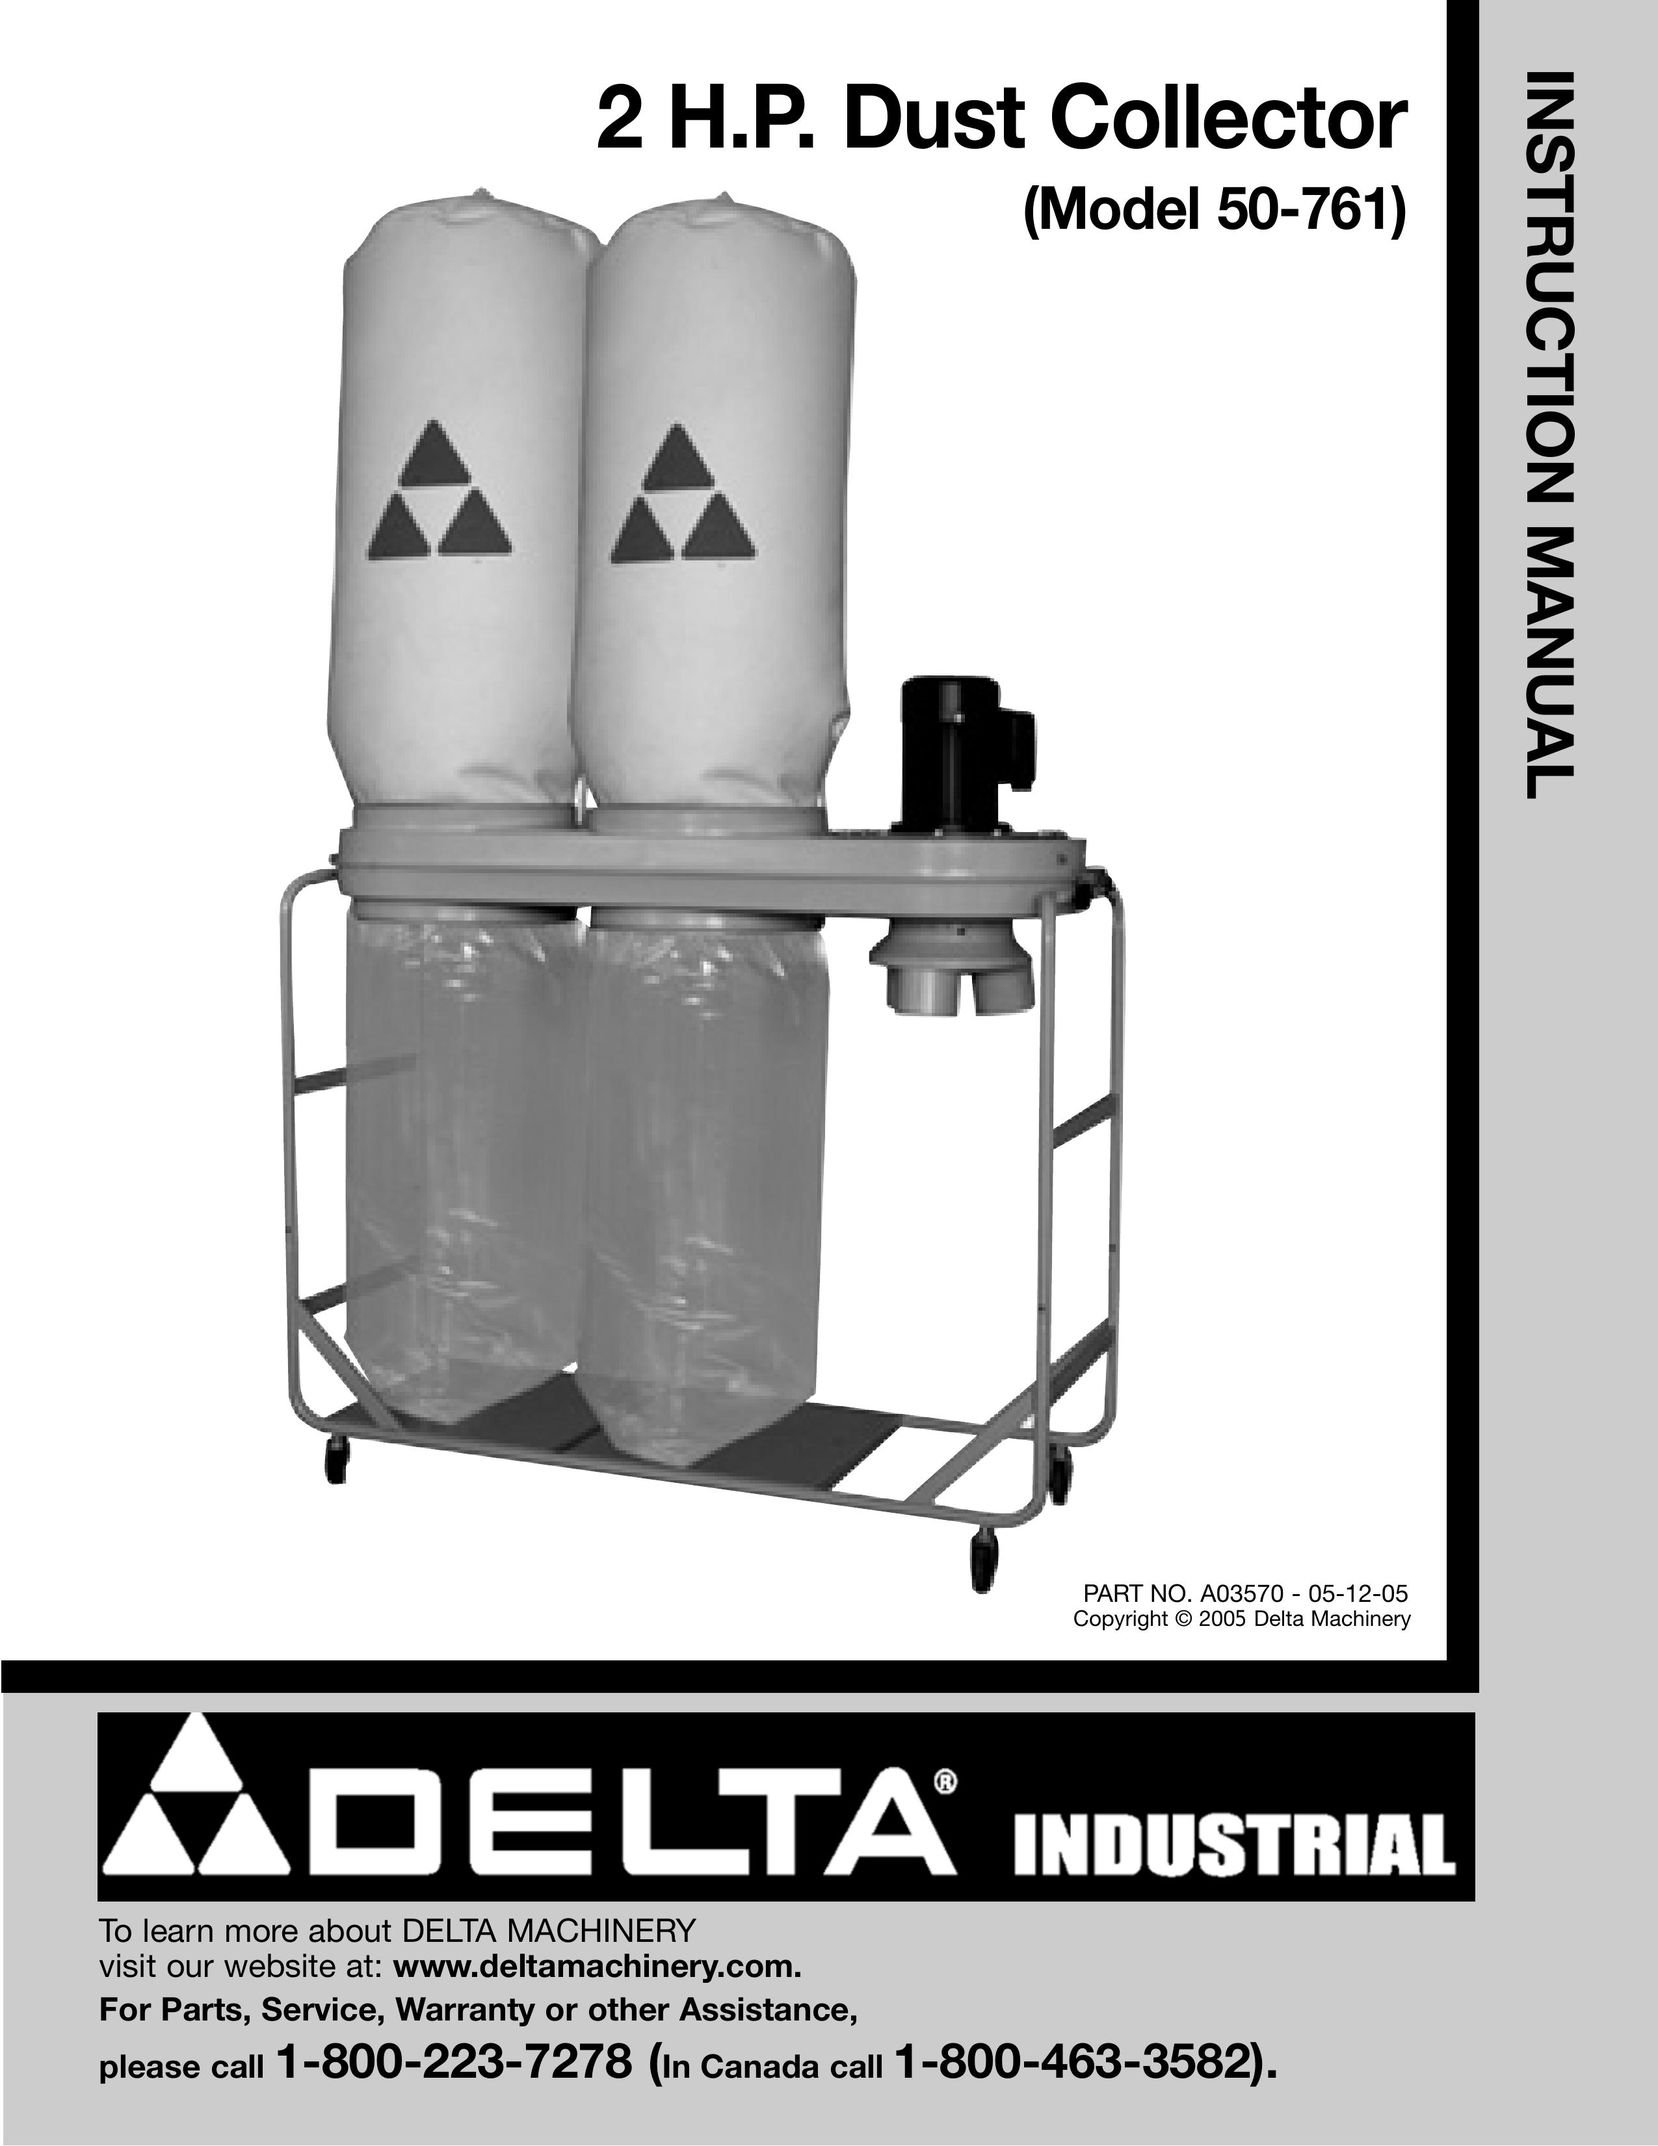 DeWalt 50-761 Dust Collector User Manual